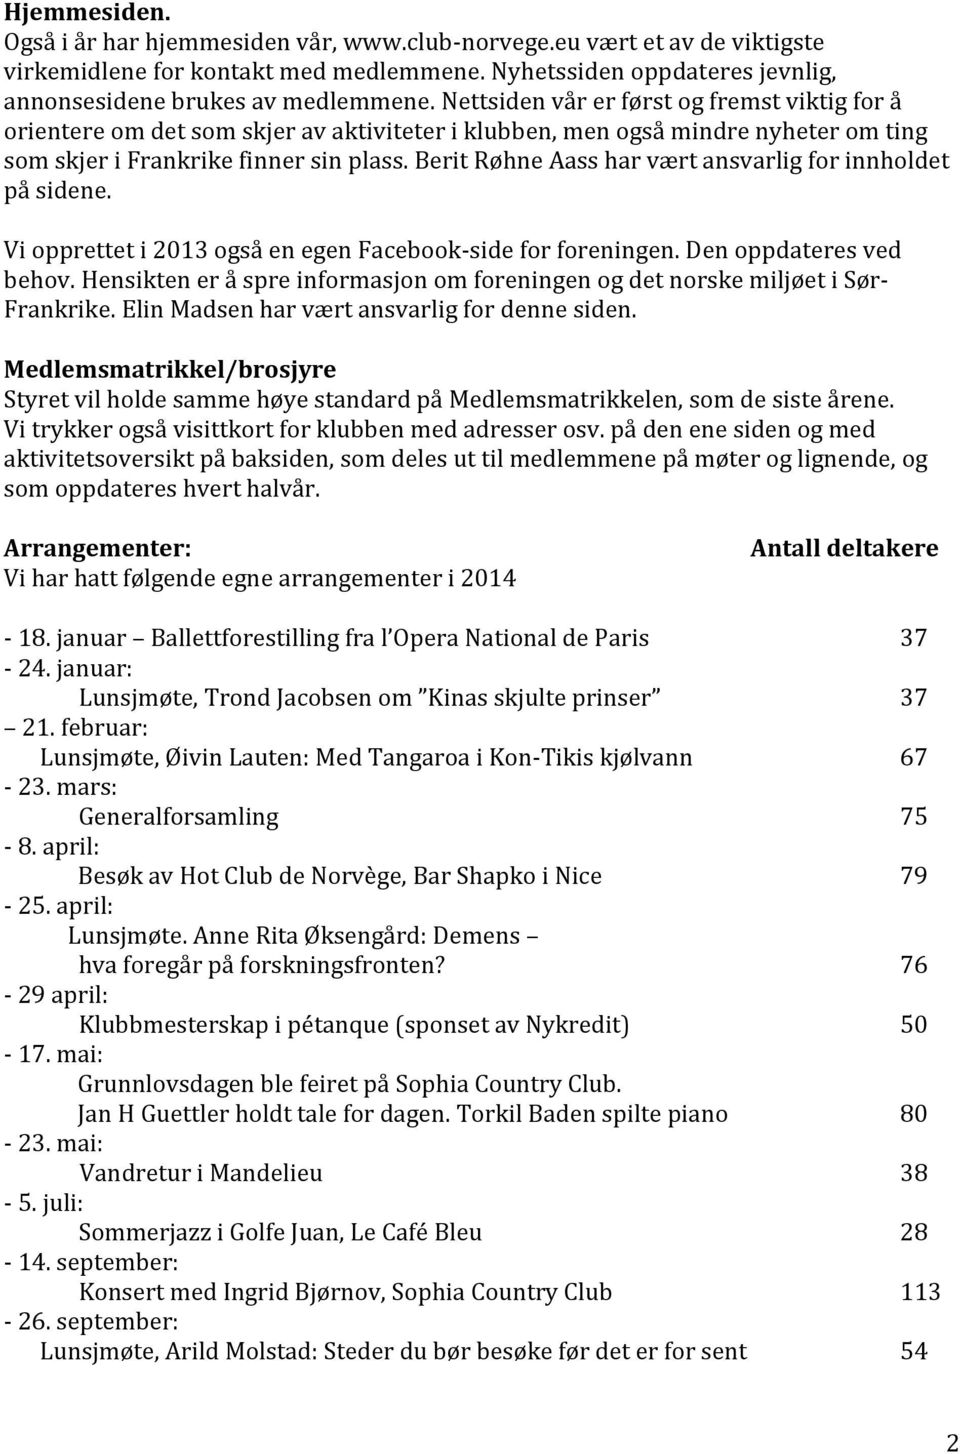 ÅRSBERETNING 2014 for Norvège Côte dazur - PDF Gratis nedlasting